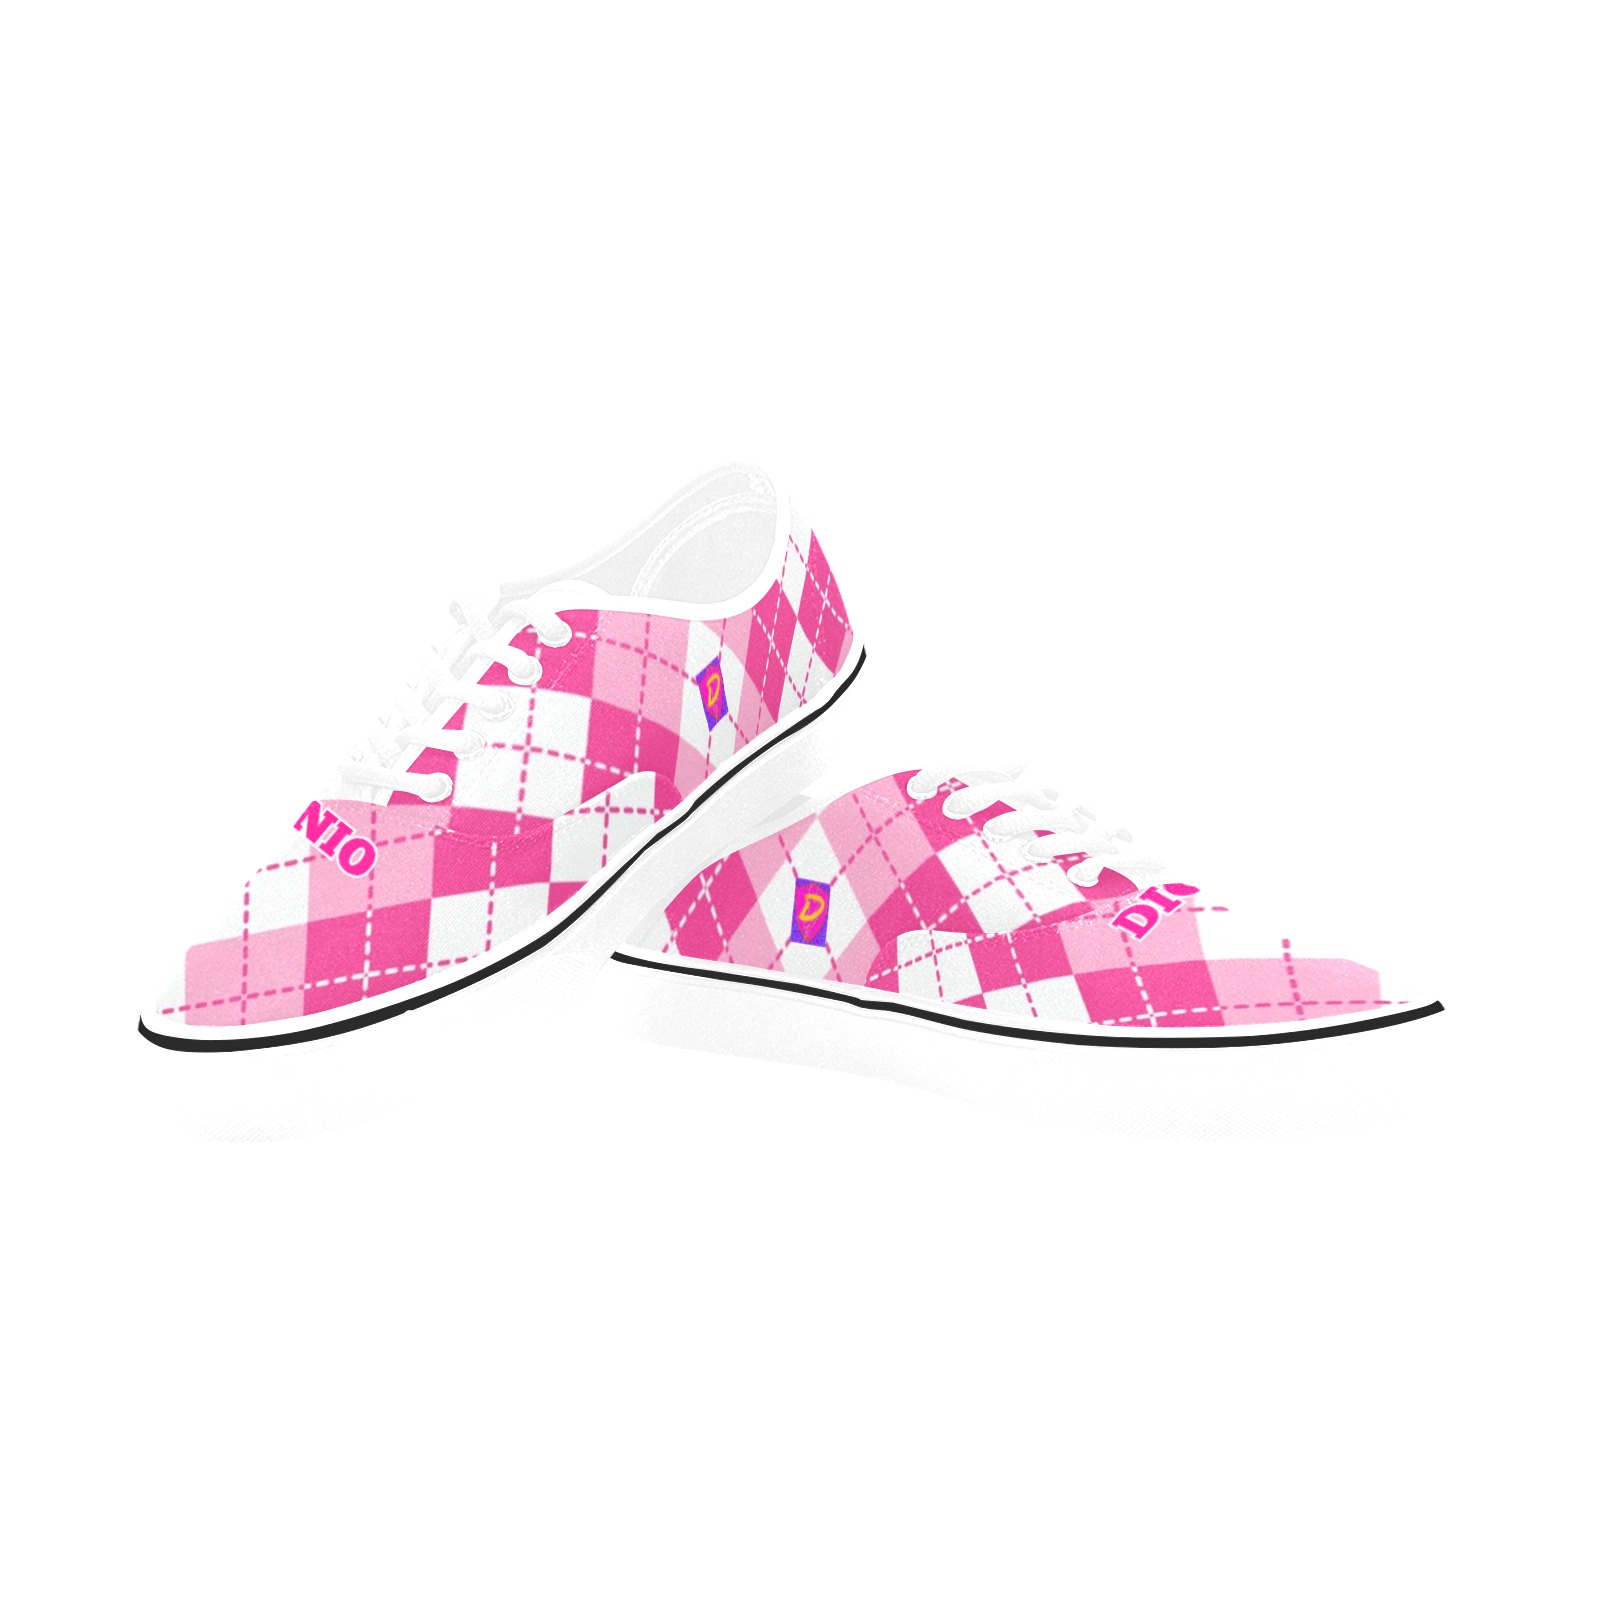 DIONIO - Ladies' Pink & White Argyle Casual Classic Canvas Low Top Shoes Classic Women's Canvas Low Top Shoes (Model E001-4)